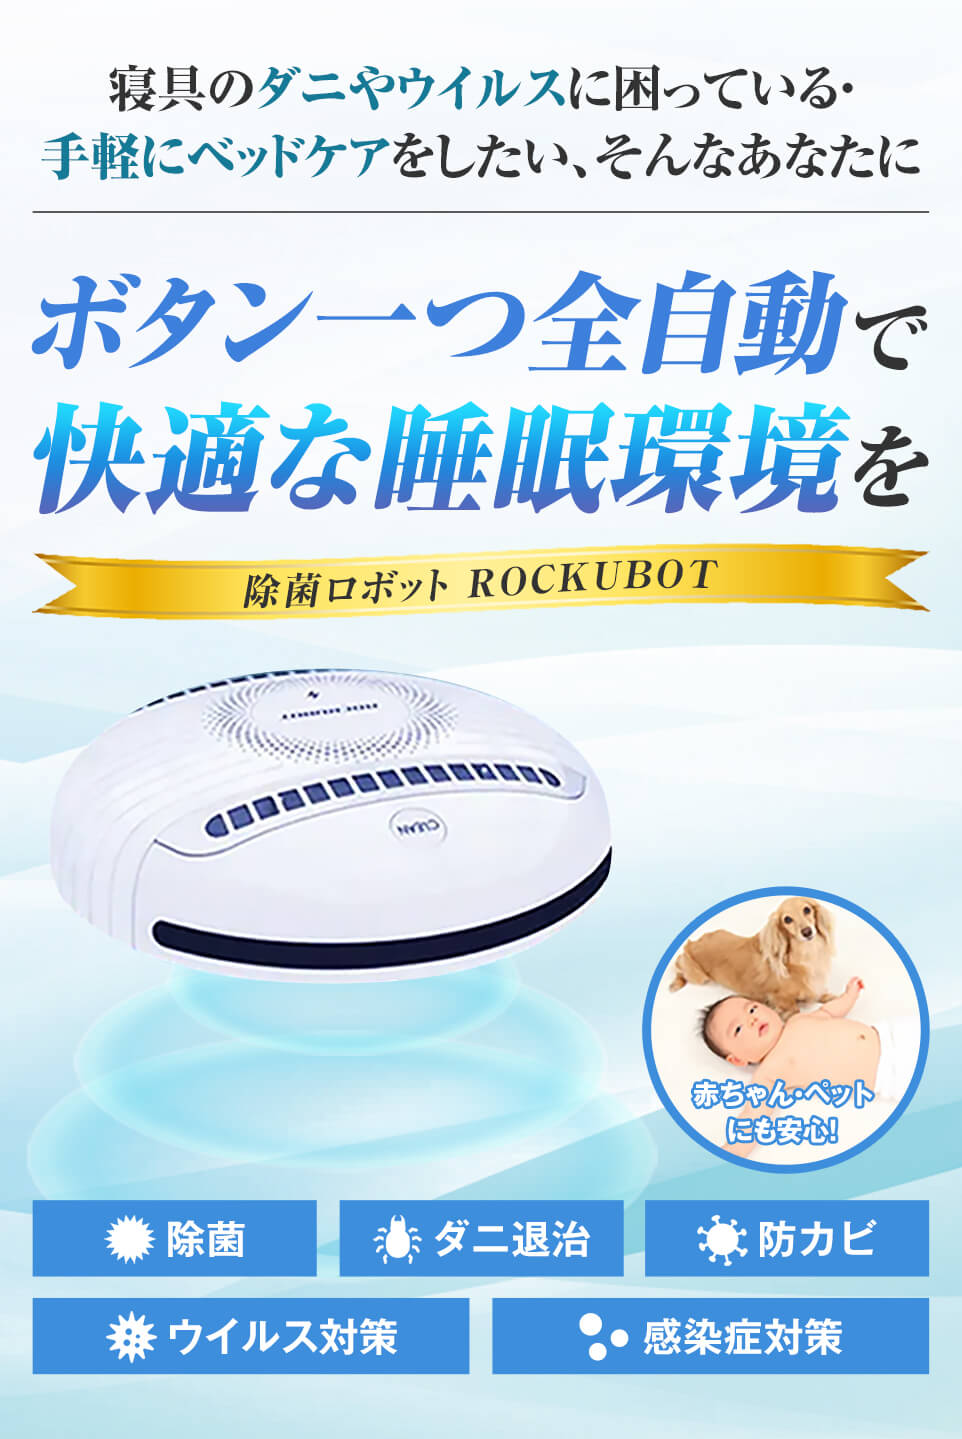 ROCKUBOT JAPAN 公式HP